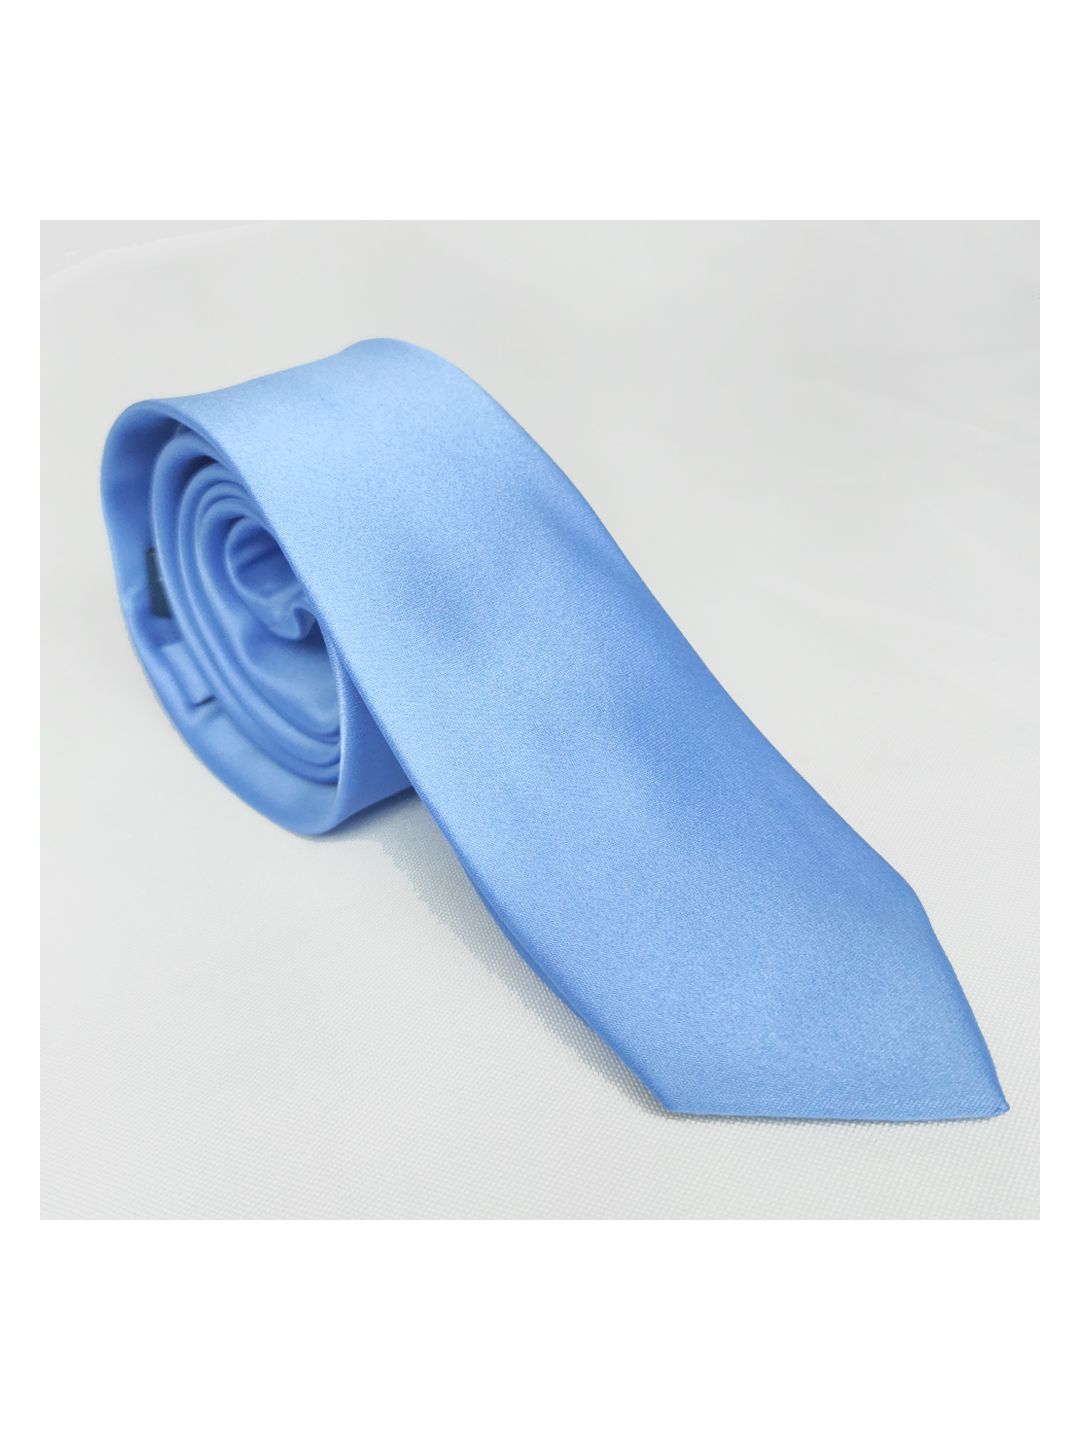 Gravata Slim Colors Azul Claro - Roberto Alfaiate | Trajes fino sob medida